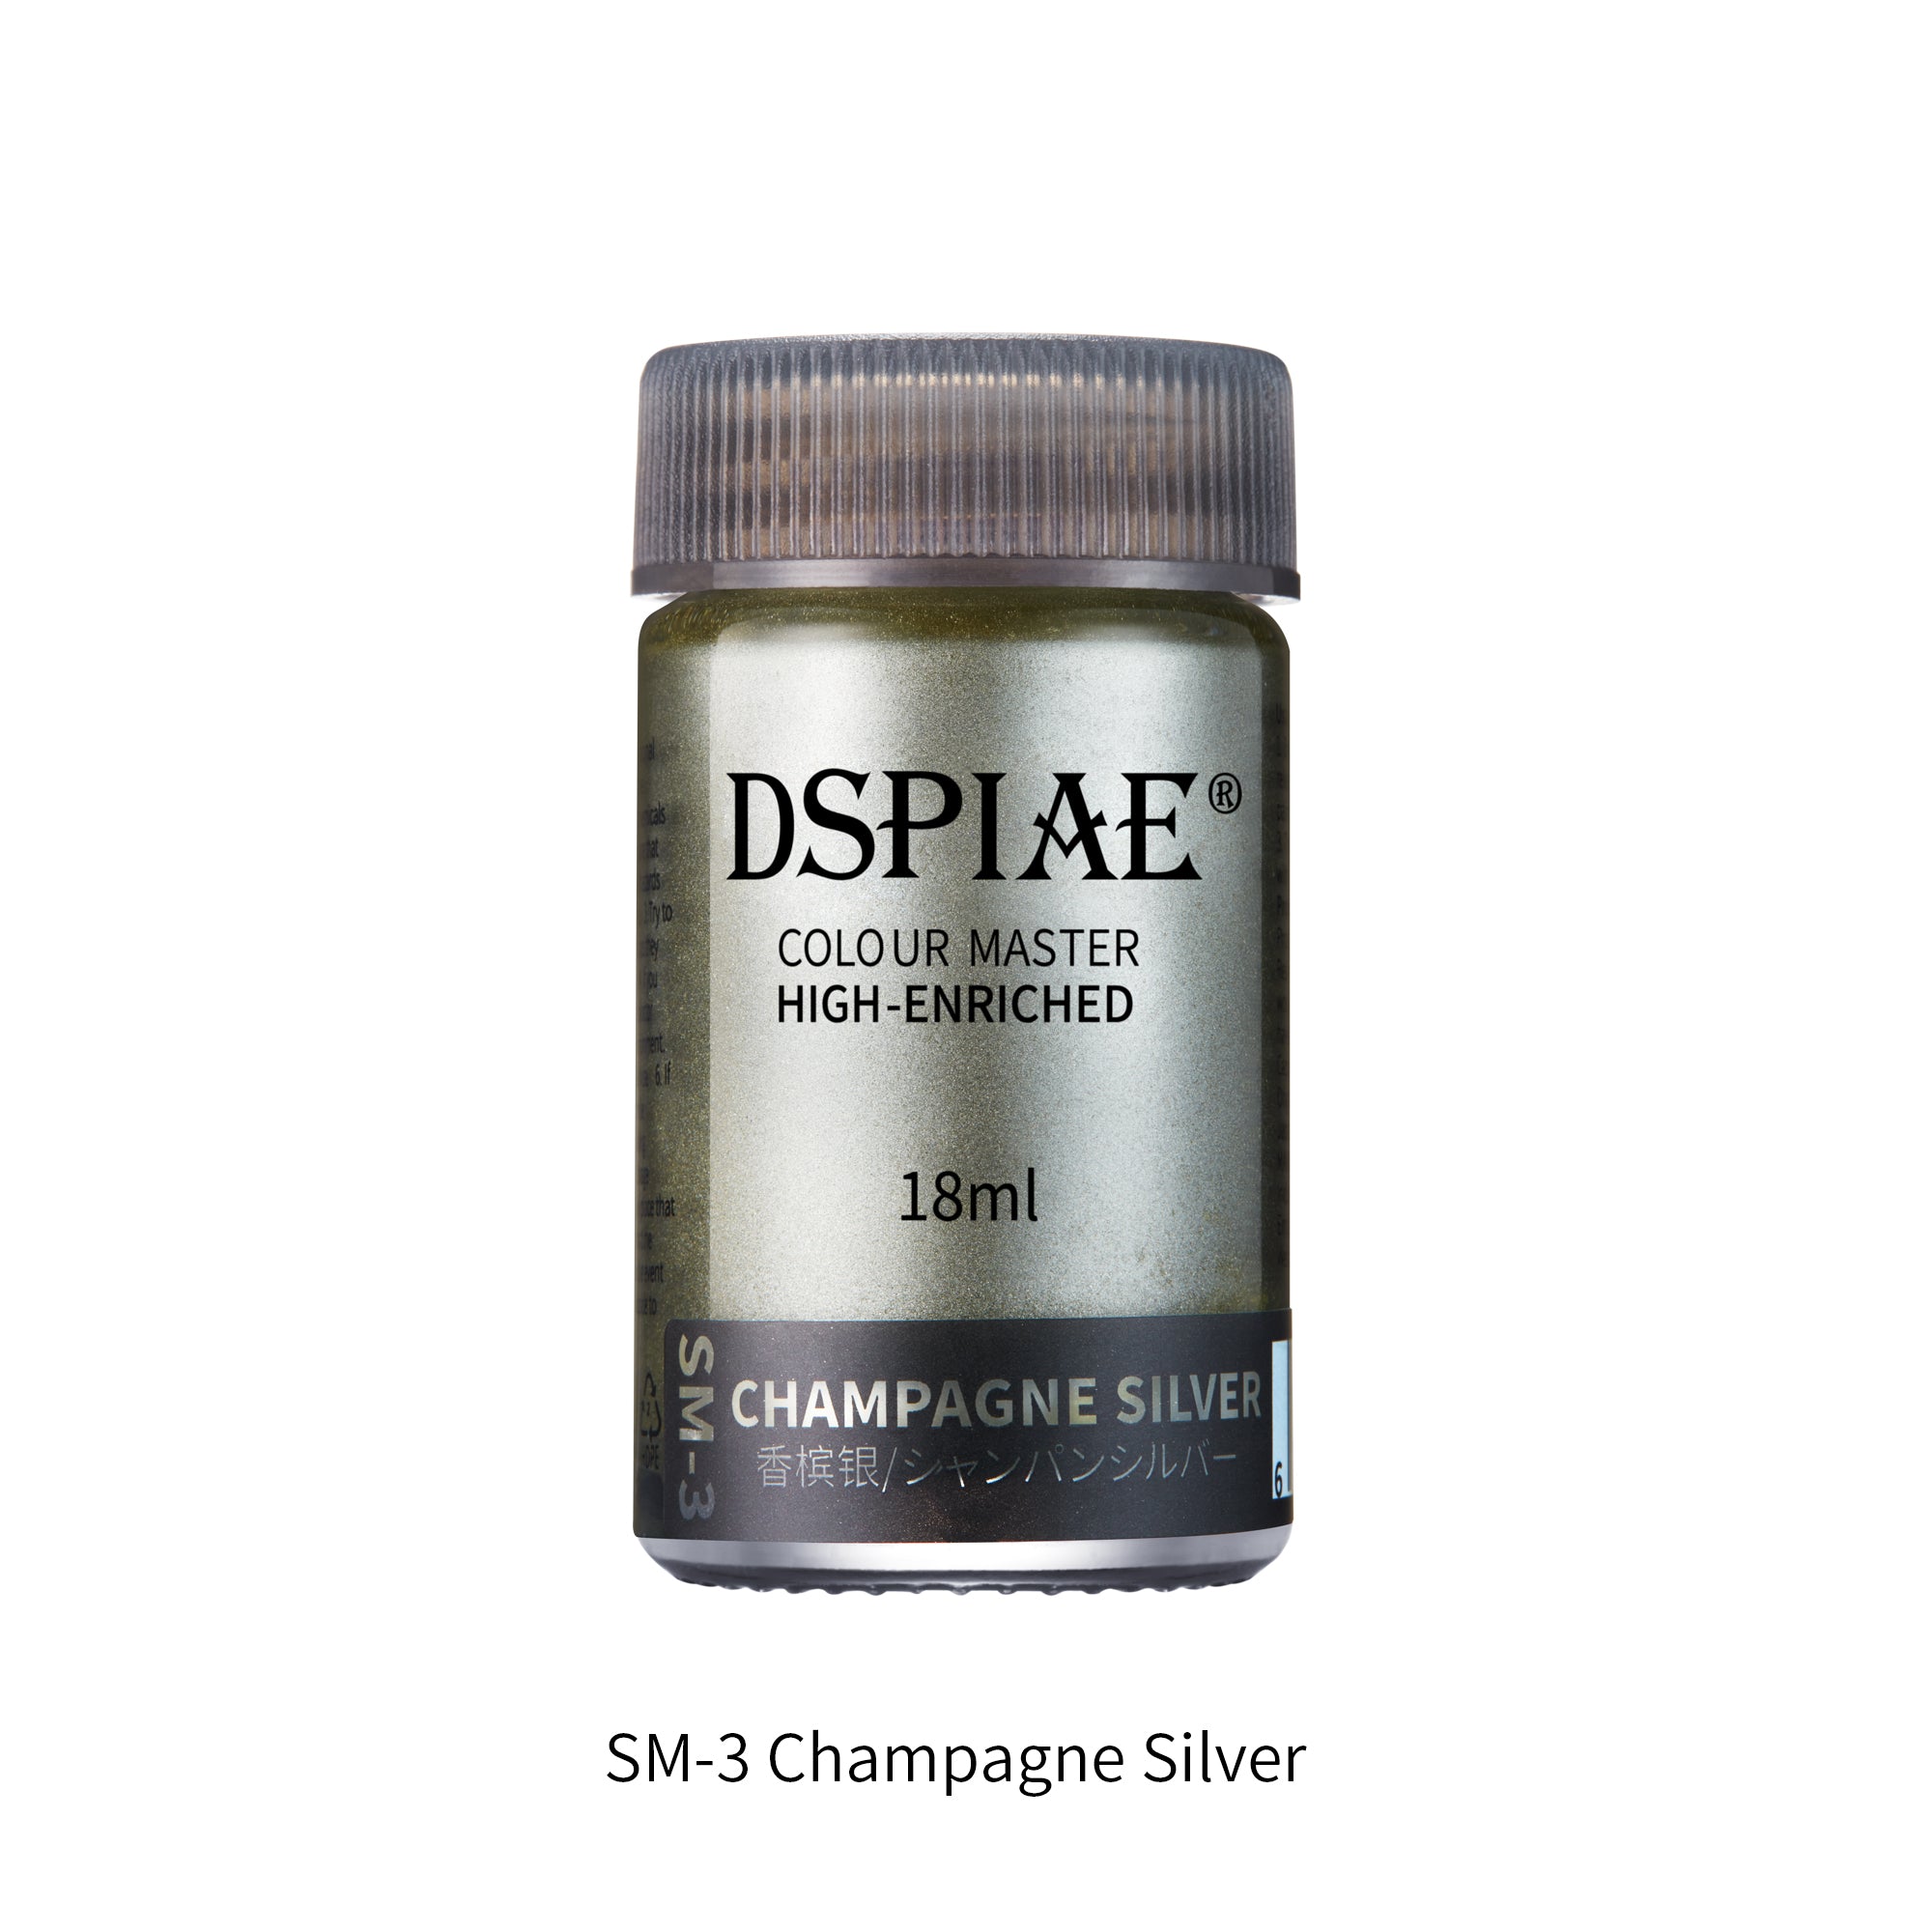 SM-3 Champagne Silver 18ml